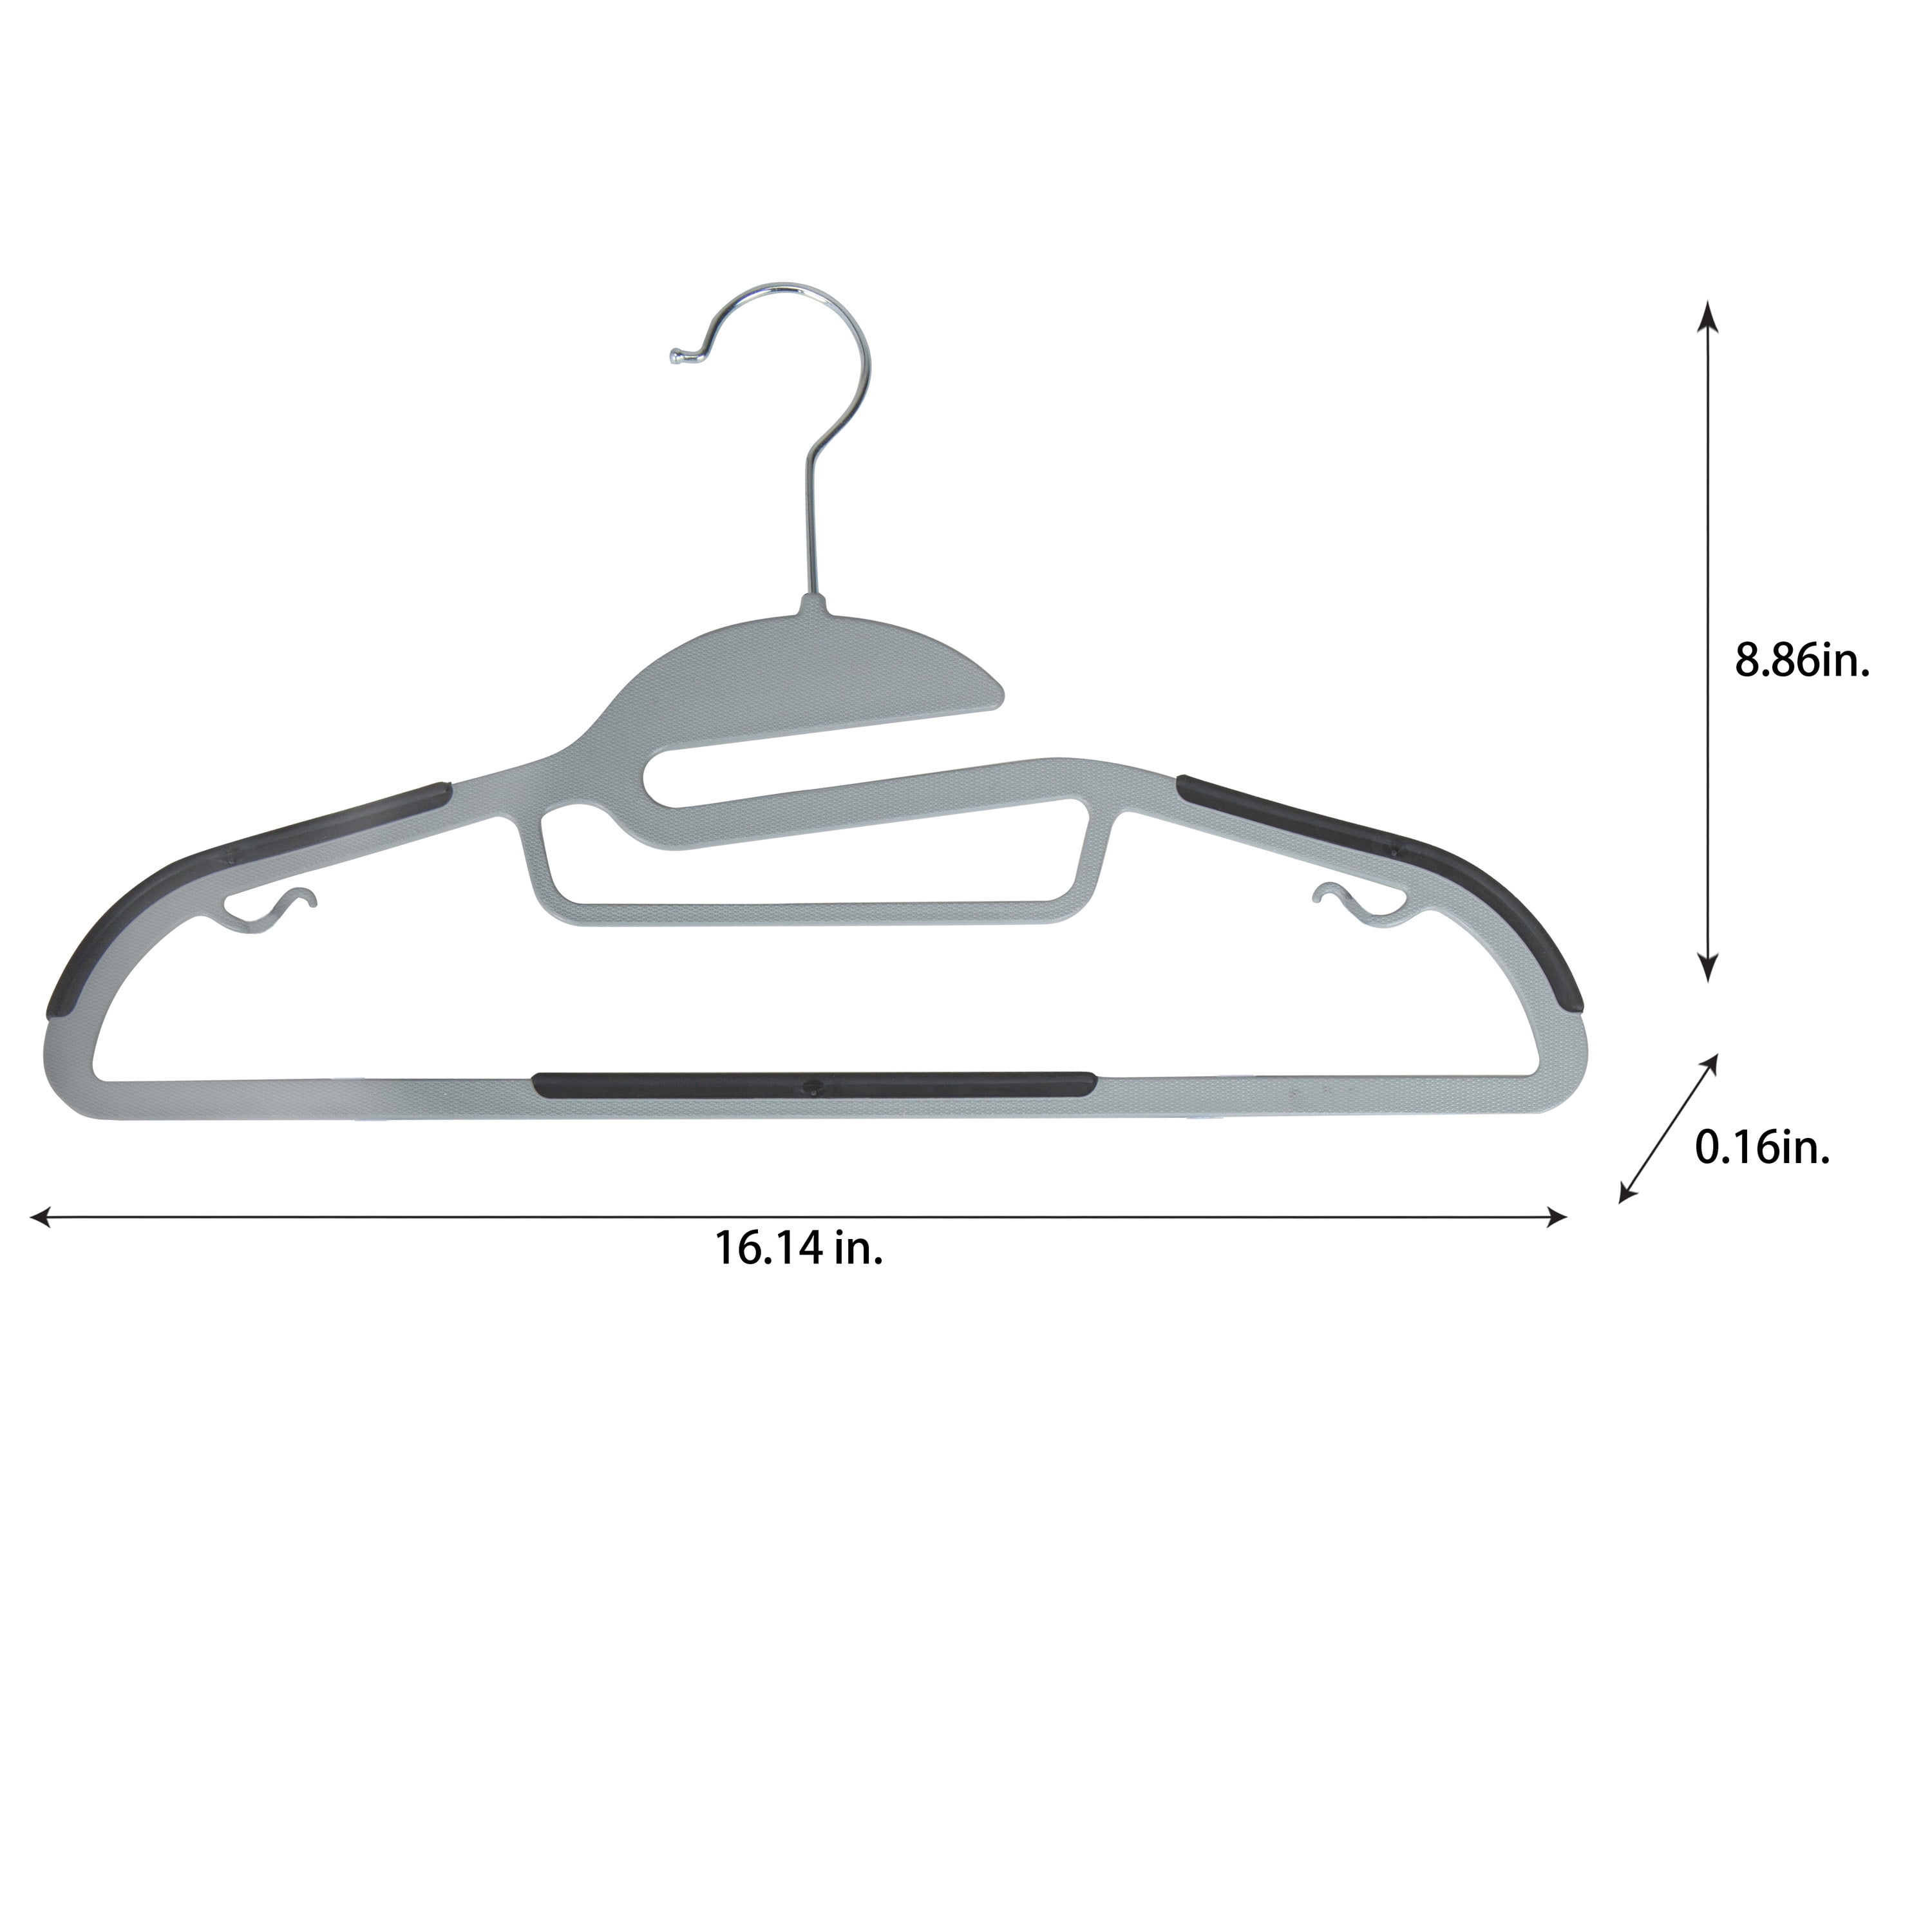 Simplify 8 Pack S-Shape Non Slip Plastic Shirt Hanger with Tie Bar in White